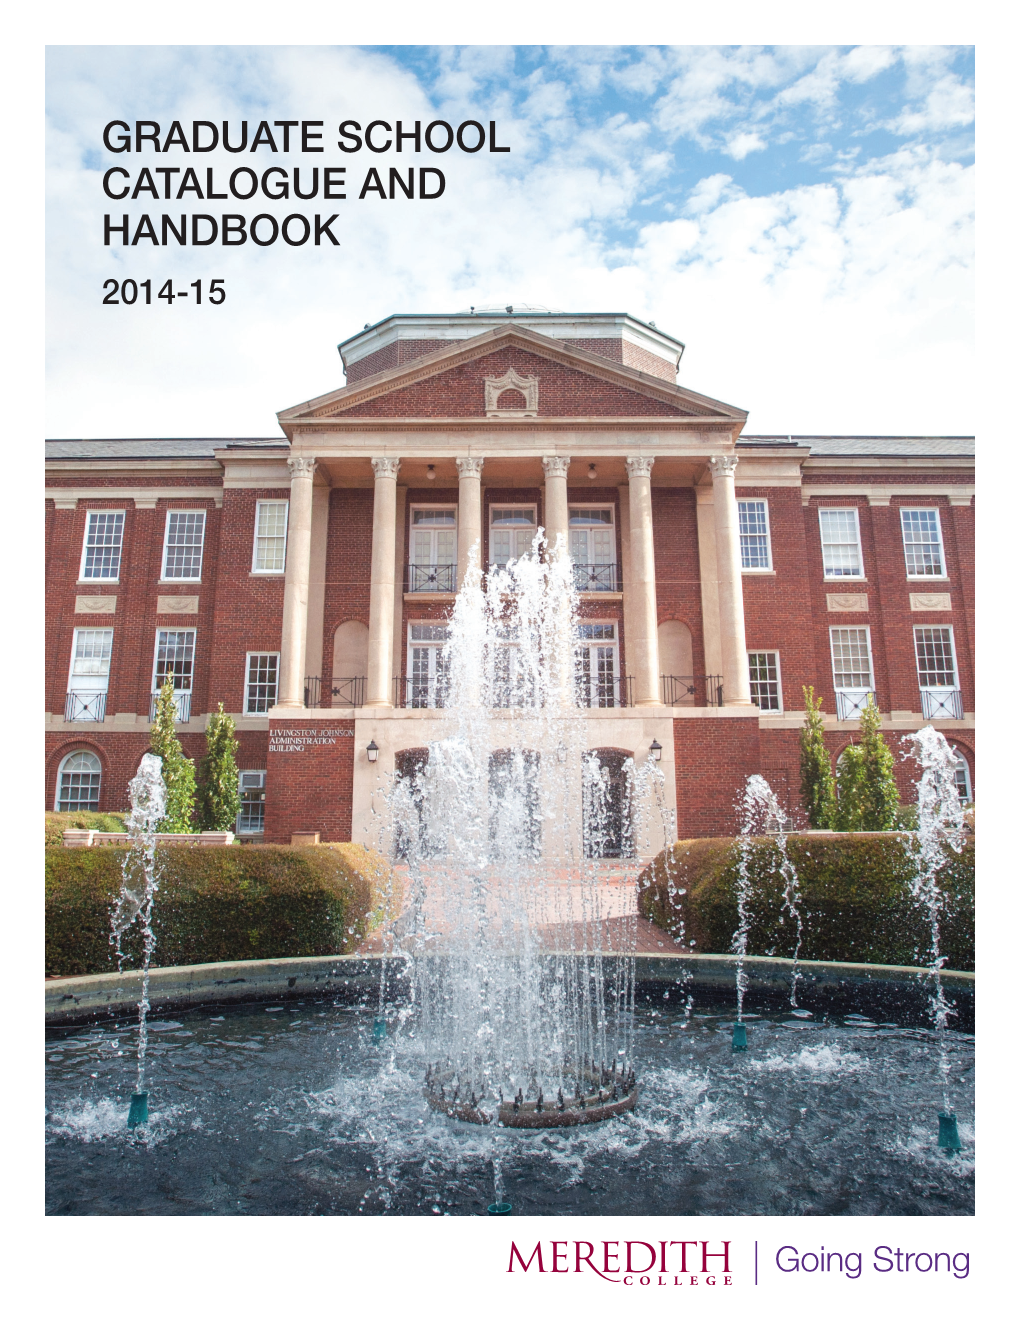 GRADUATE SCHOOL CATALOGUE and HANDBOOK 2014-15 the John E